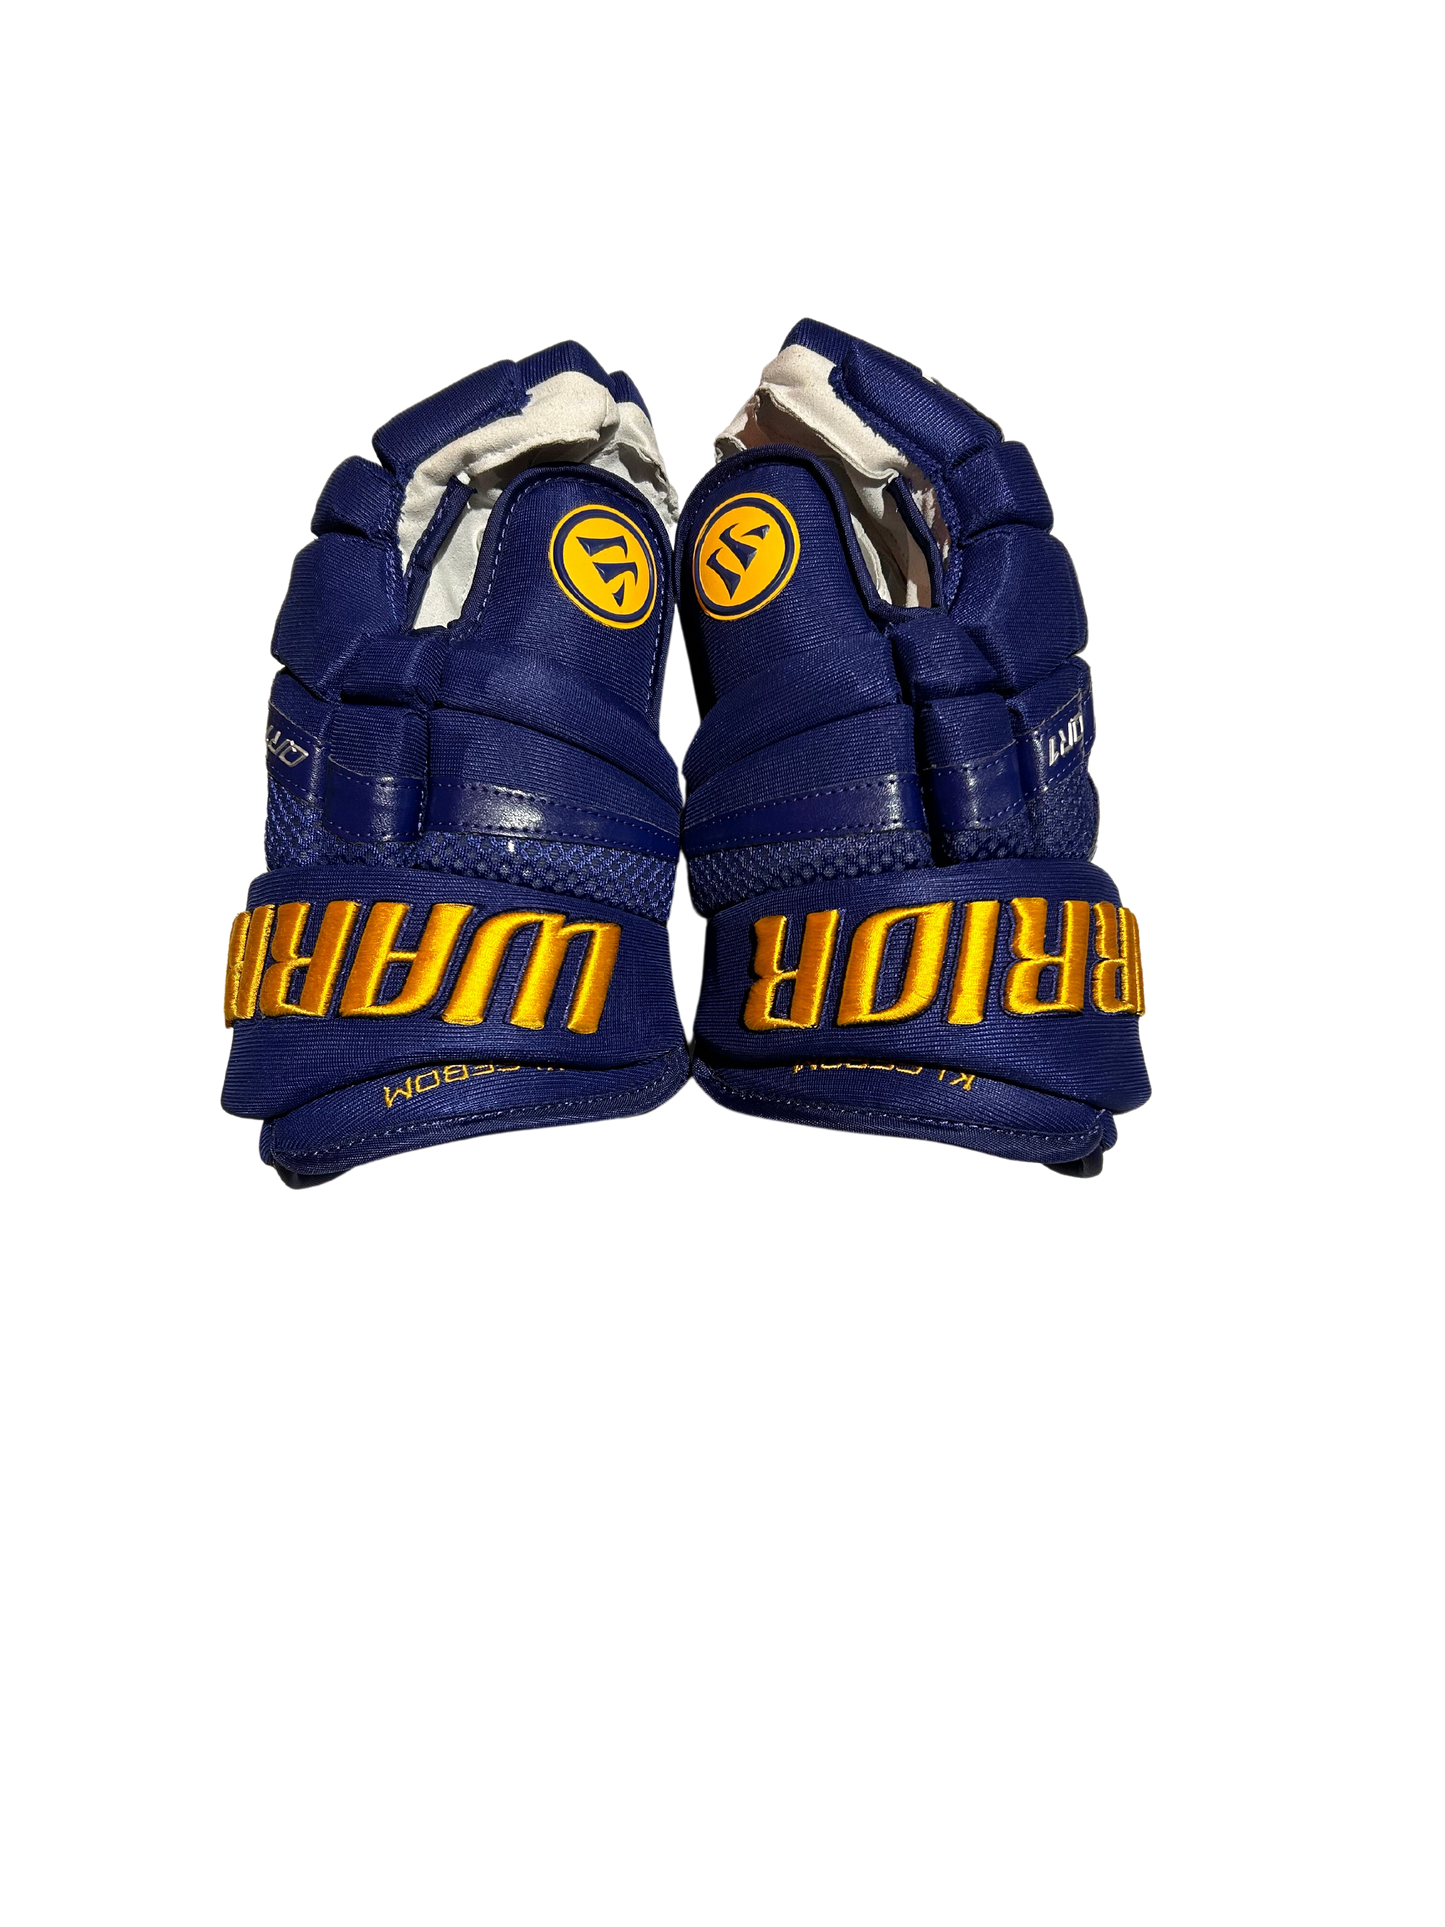 New Navy & Gold Team Sweden 15" Warrior QR1 Pro Gloves (Multiple Options)